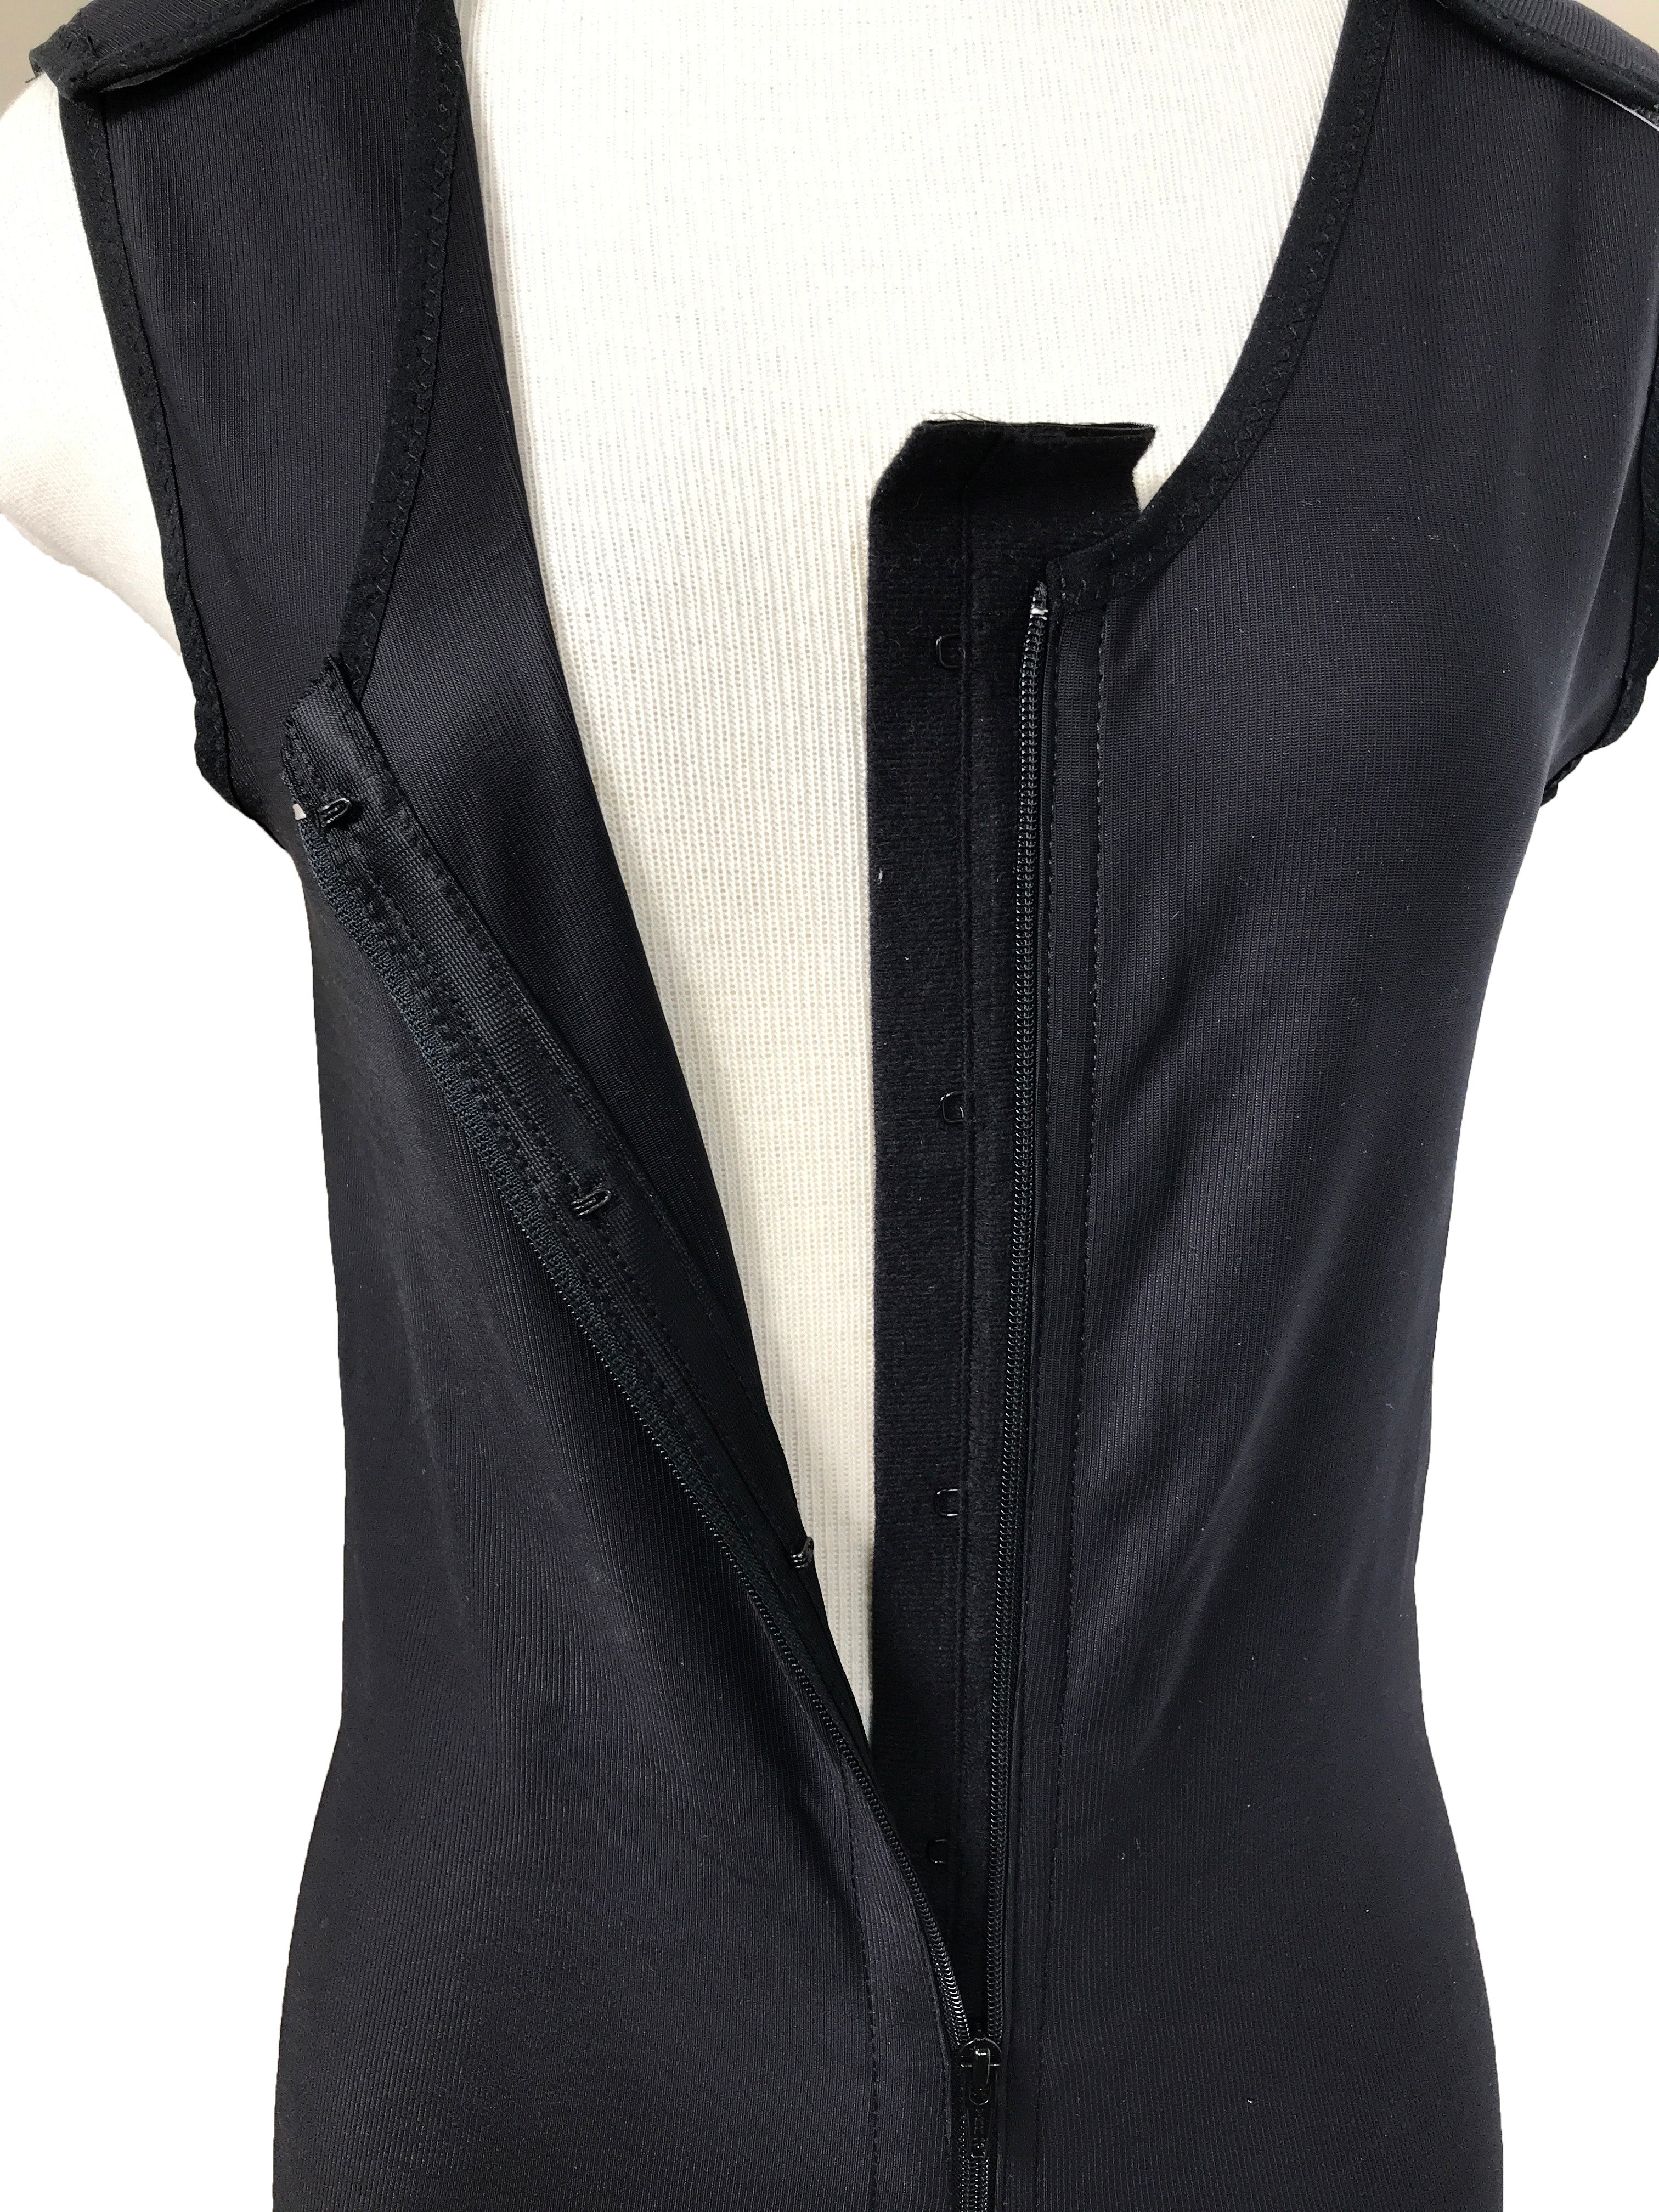 Marena ComfortWear Compression and Support Garment Black Bodysuit Men's Size M